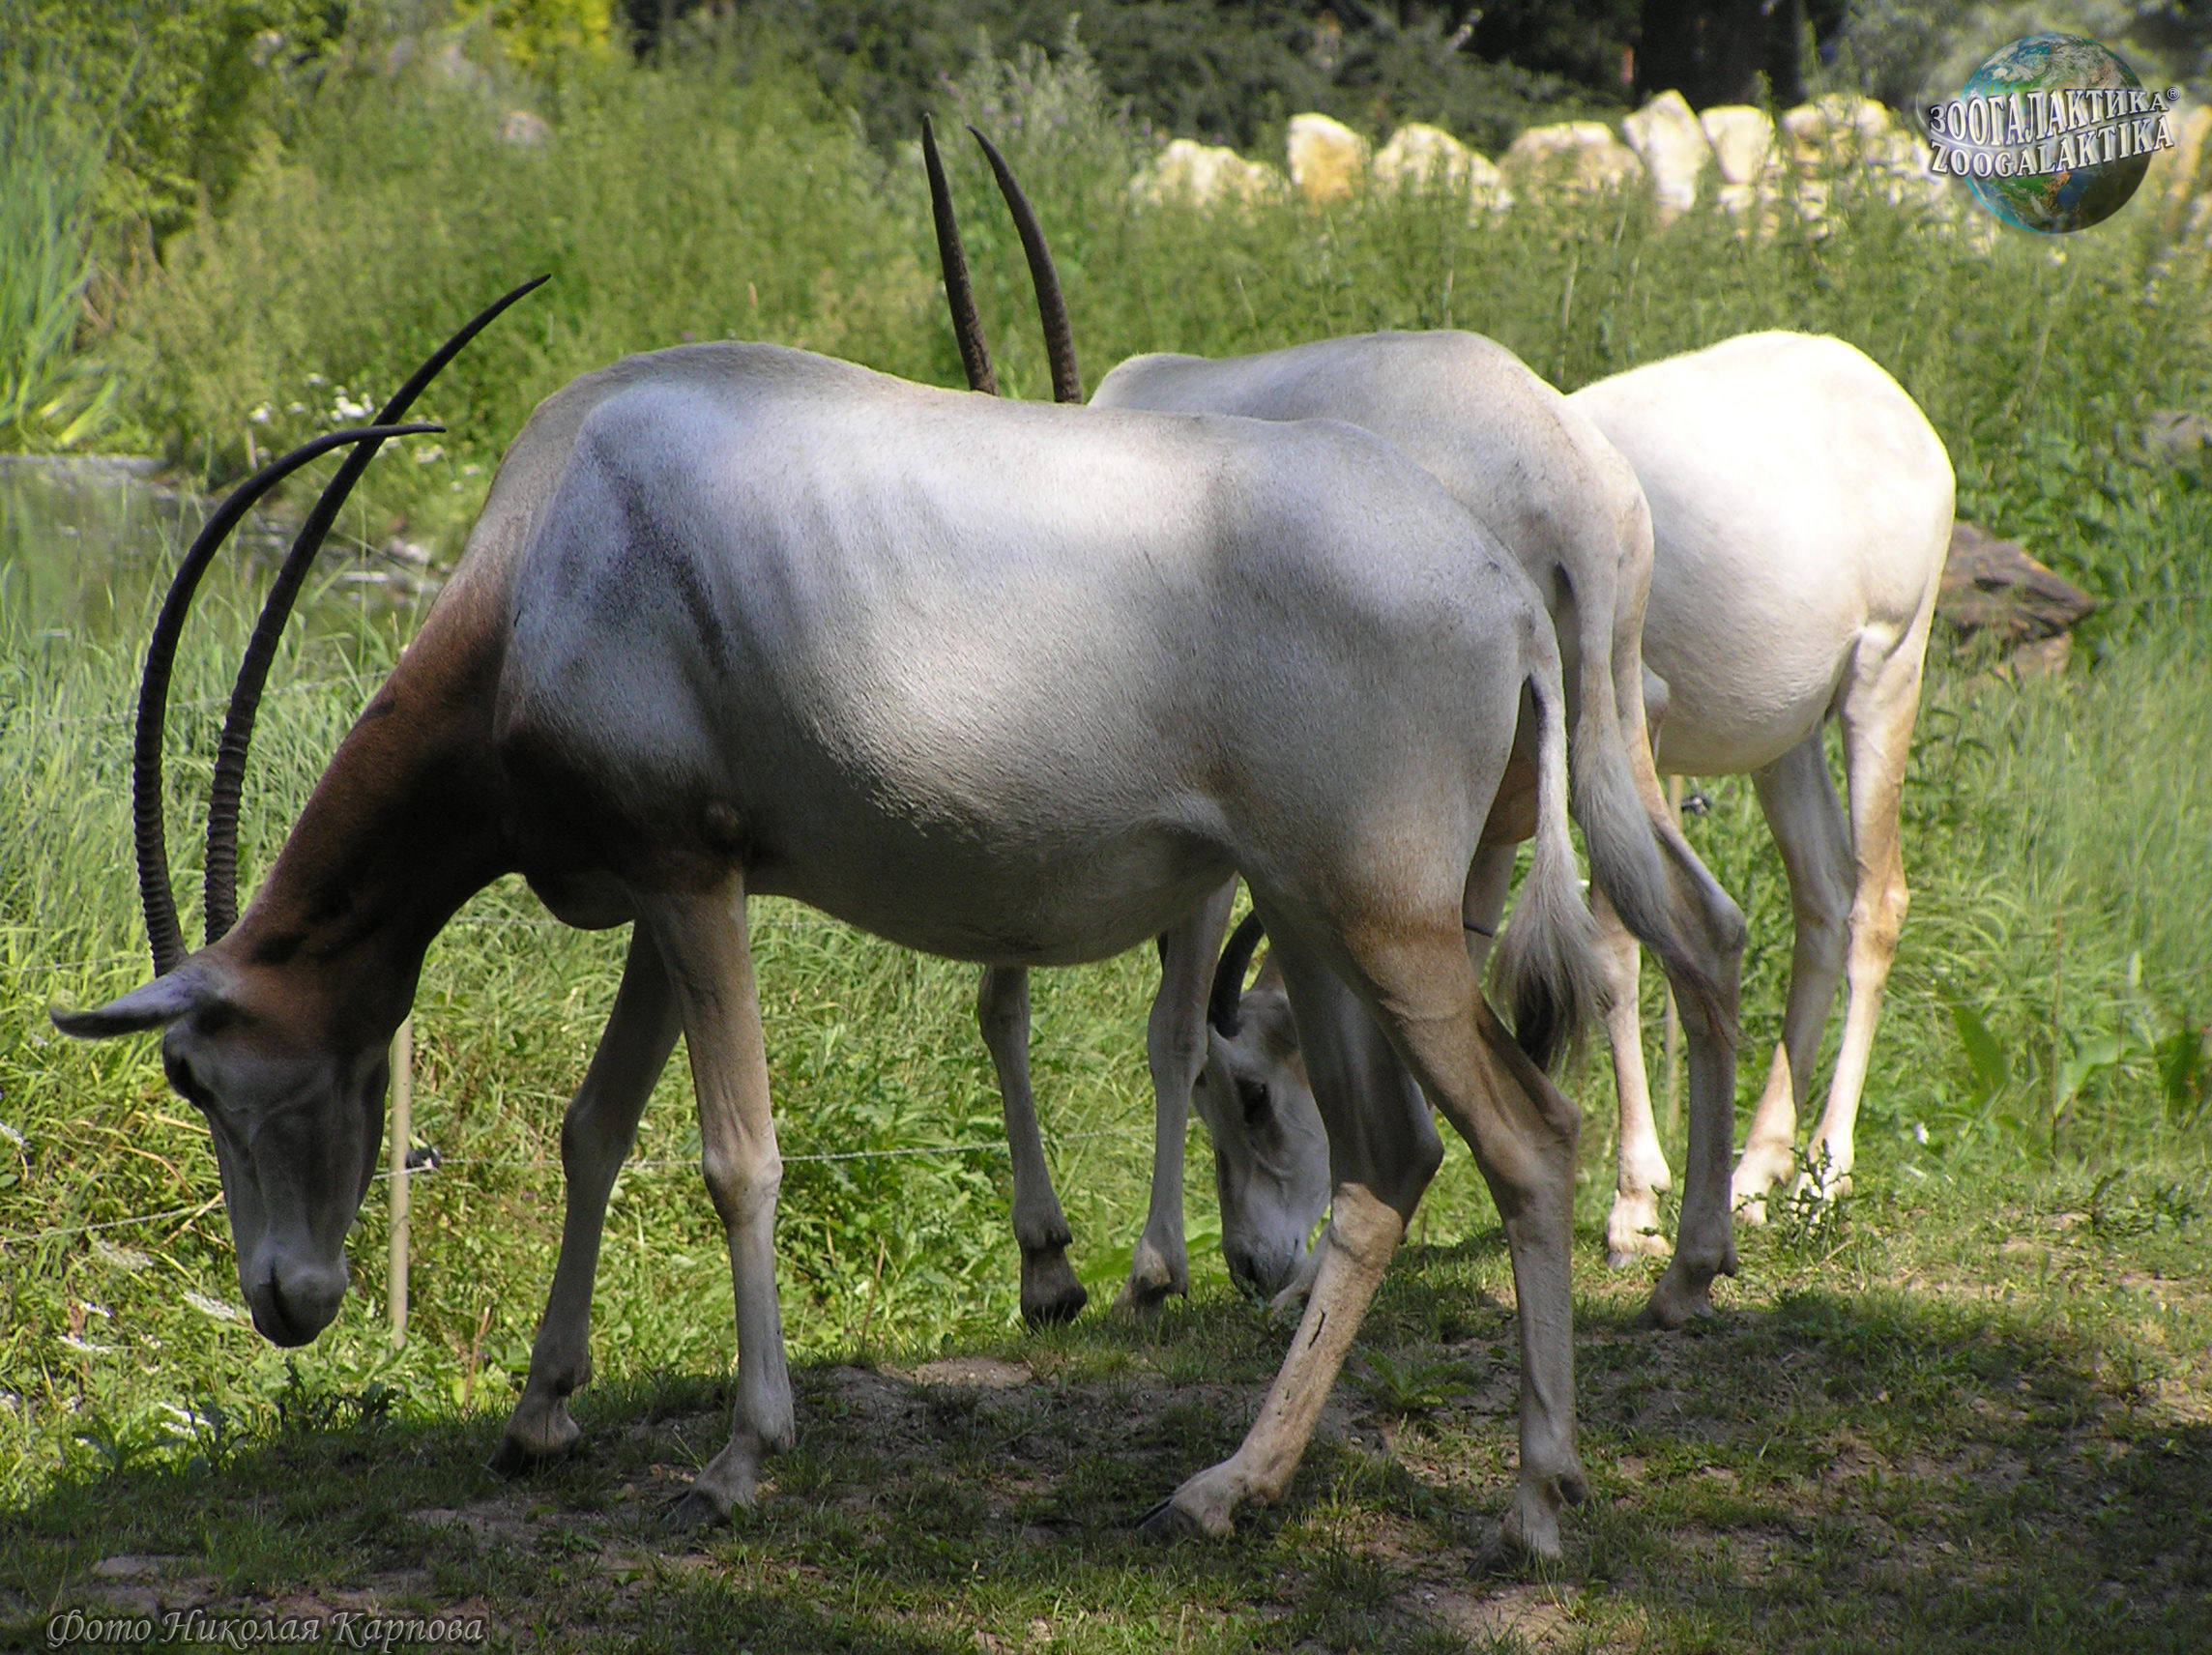 Саблерогая антилопа 6 букв. Саблерогая антилопа. Антилопа нильгау. Scimitar-Horned Oryx. Антилопа Орикс.